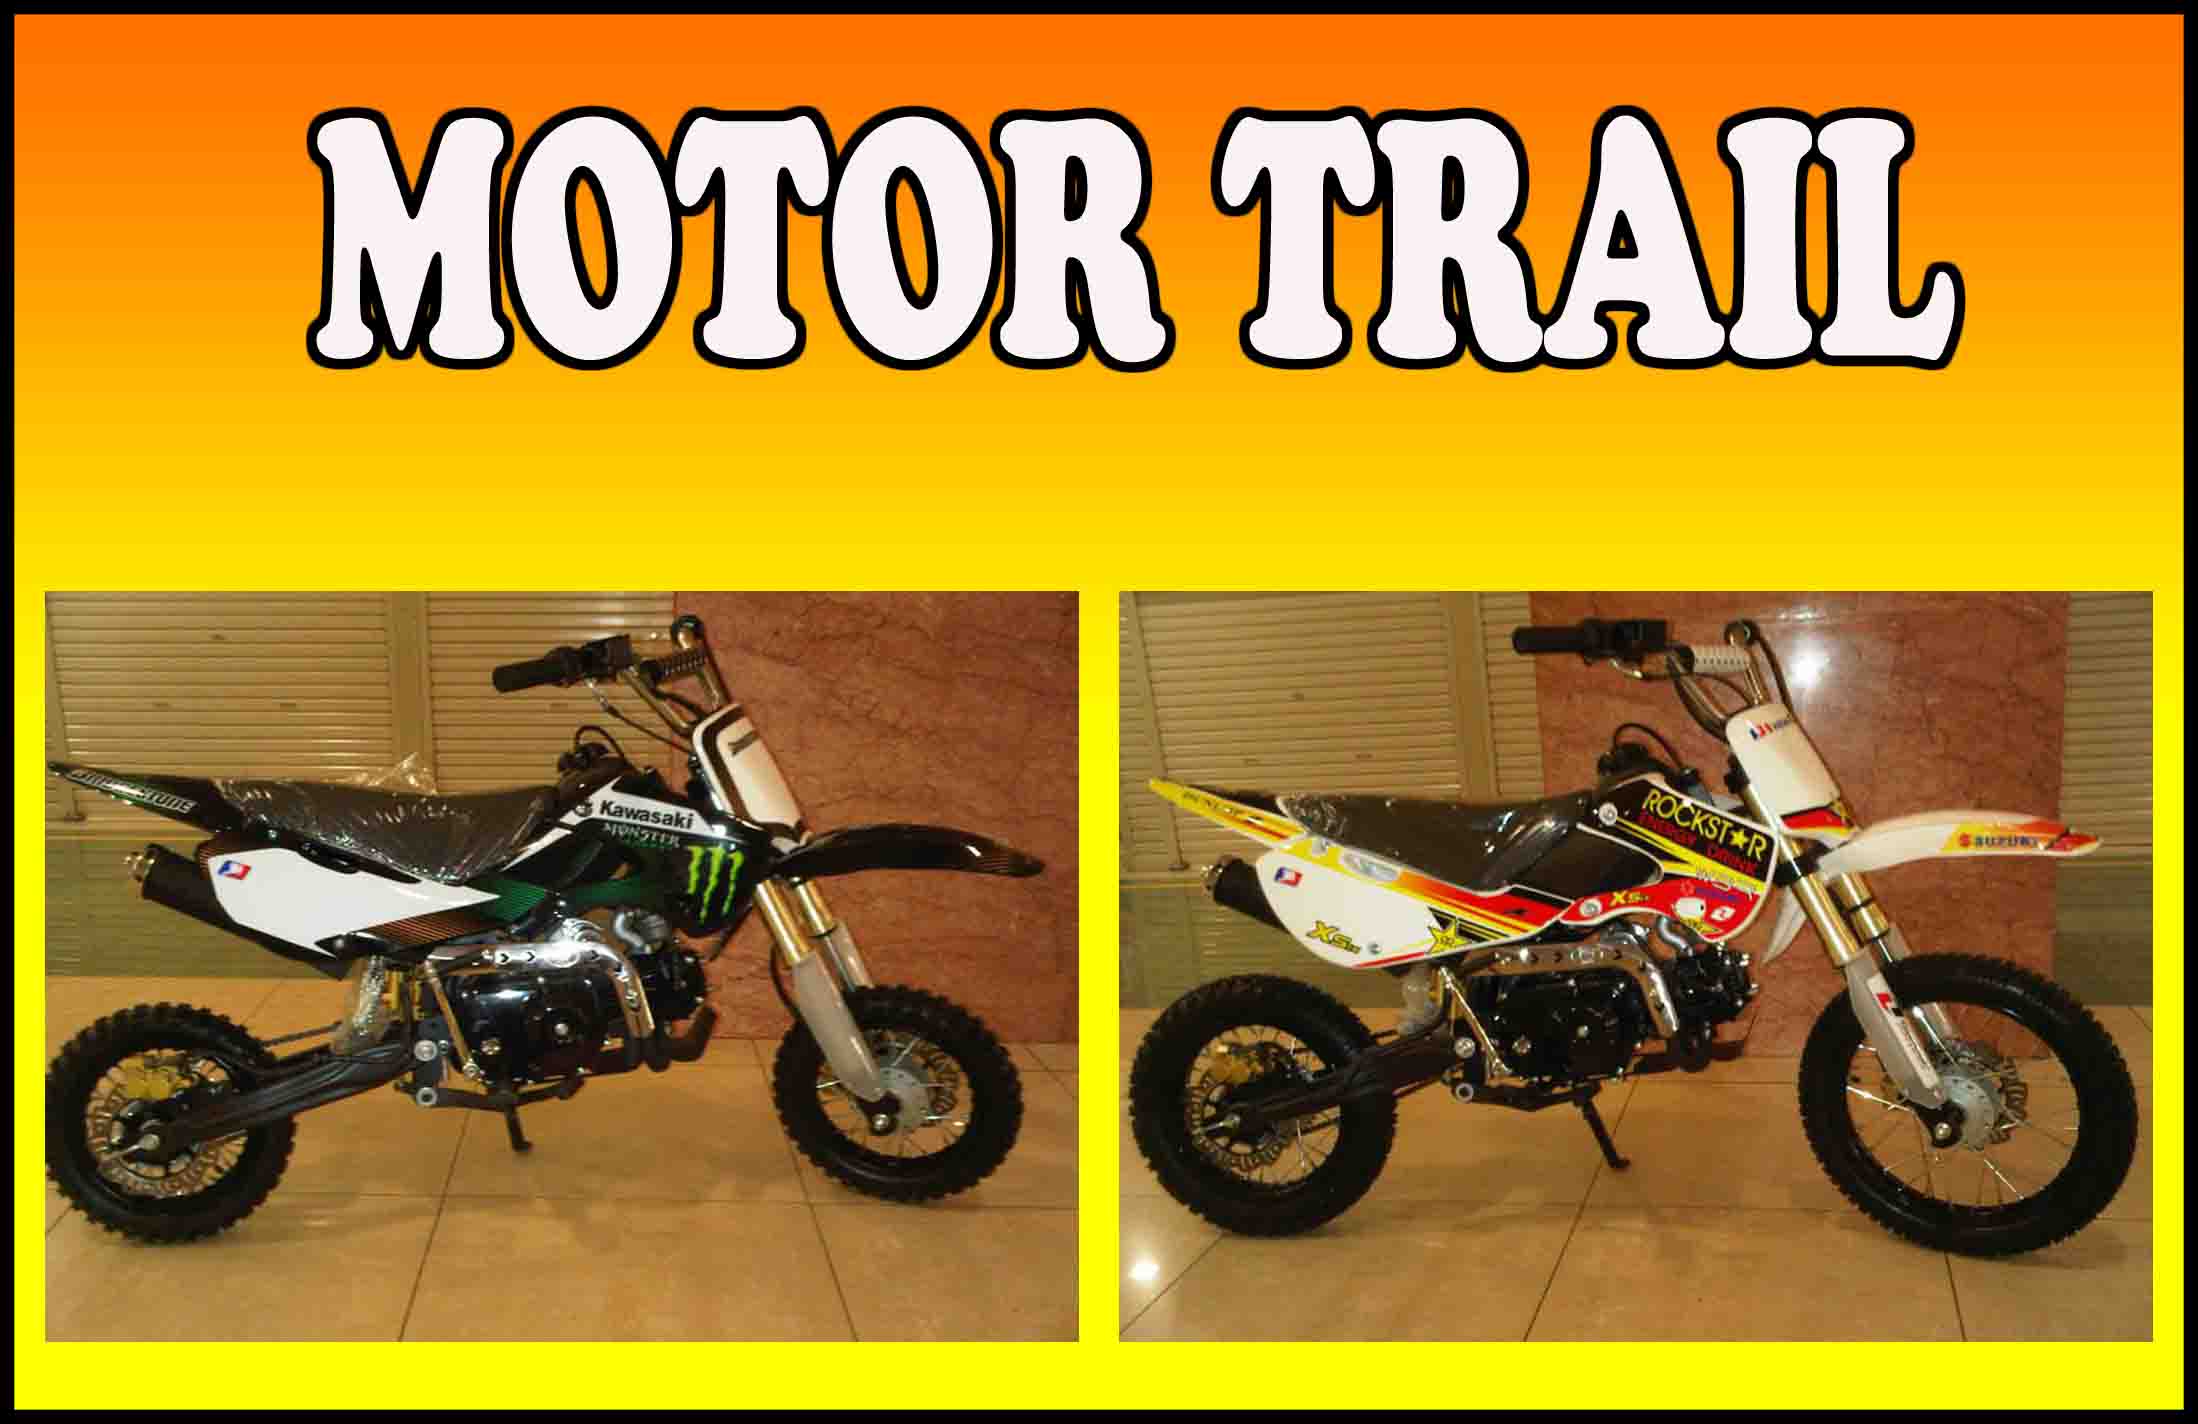 MOTOR ATV BALIKPAPAN MOTOR ATV MURAH MOTOR ATV MOTOR ATV LAMPUNG